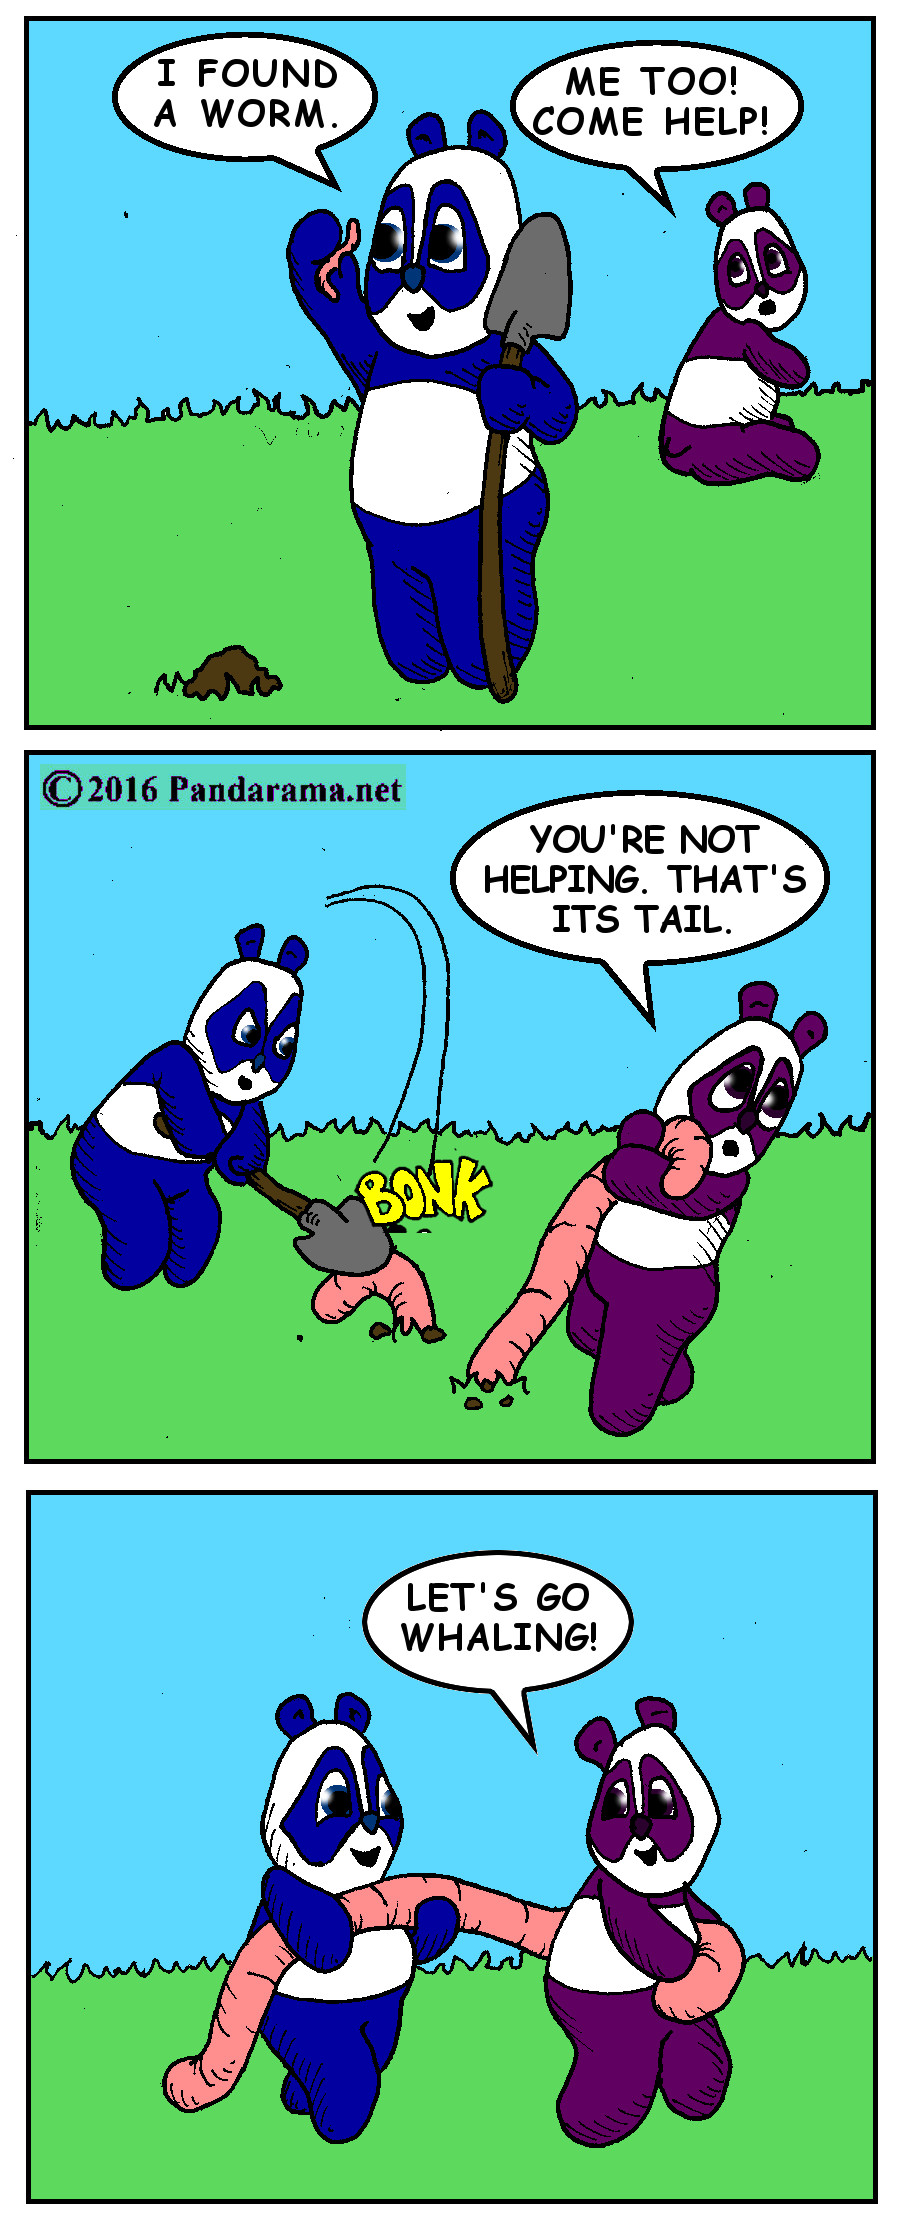 pandas find a big worm and go whaling, instead of fishing. Get it? Ha ha ha. Fuck my life cartoons. webcomics.